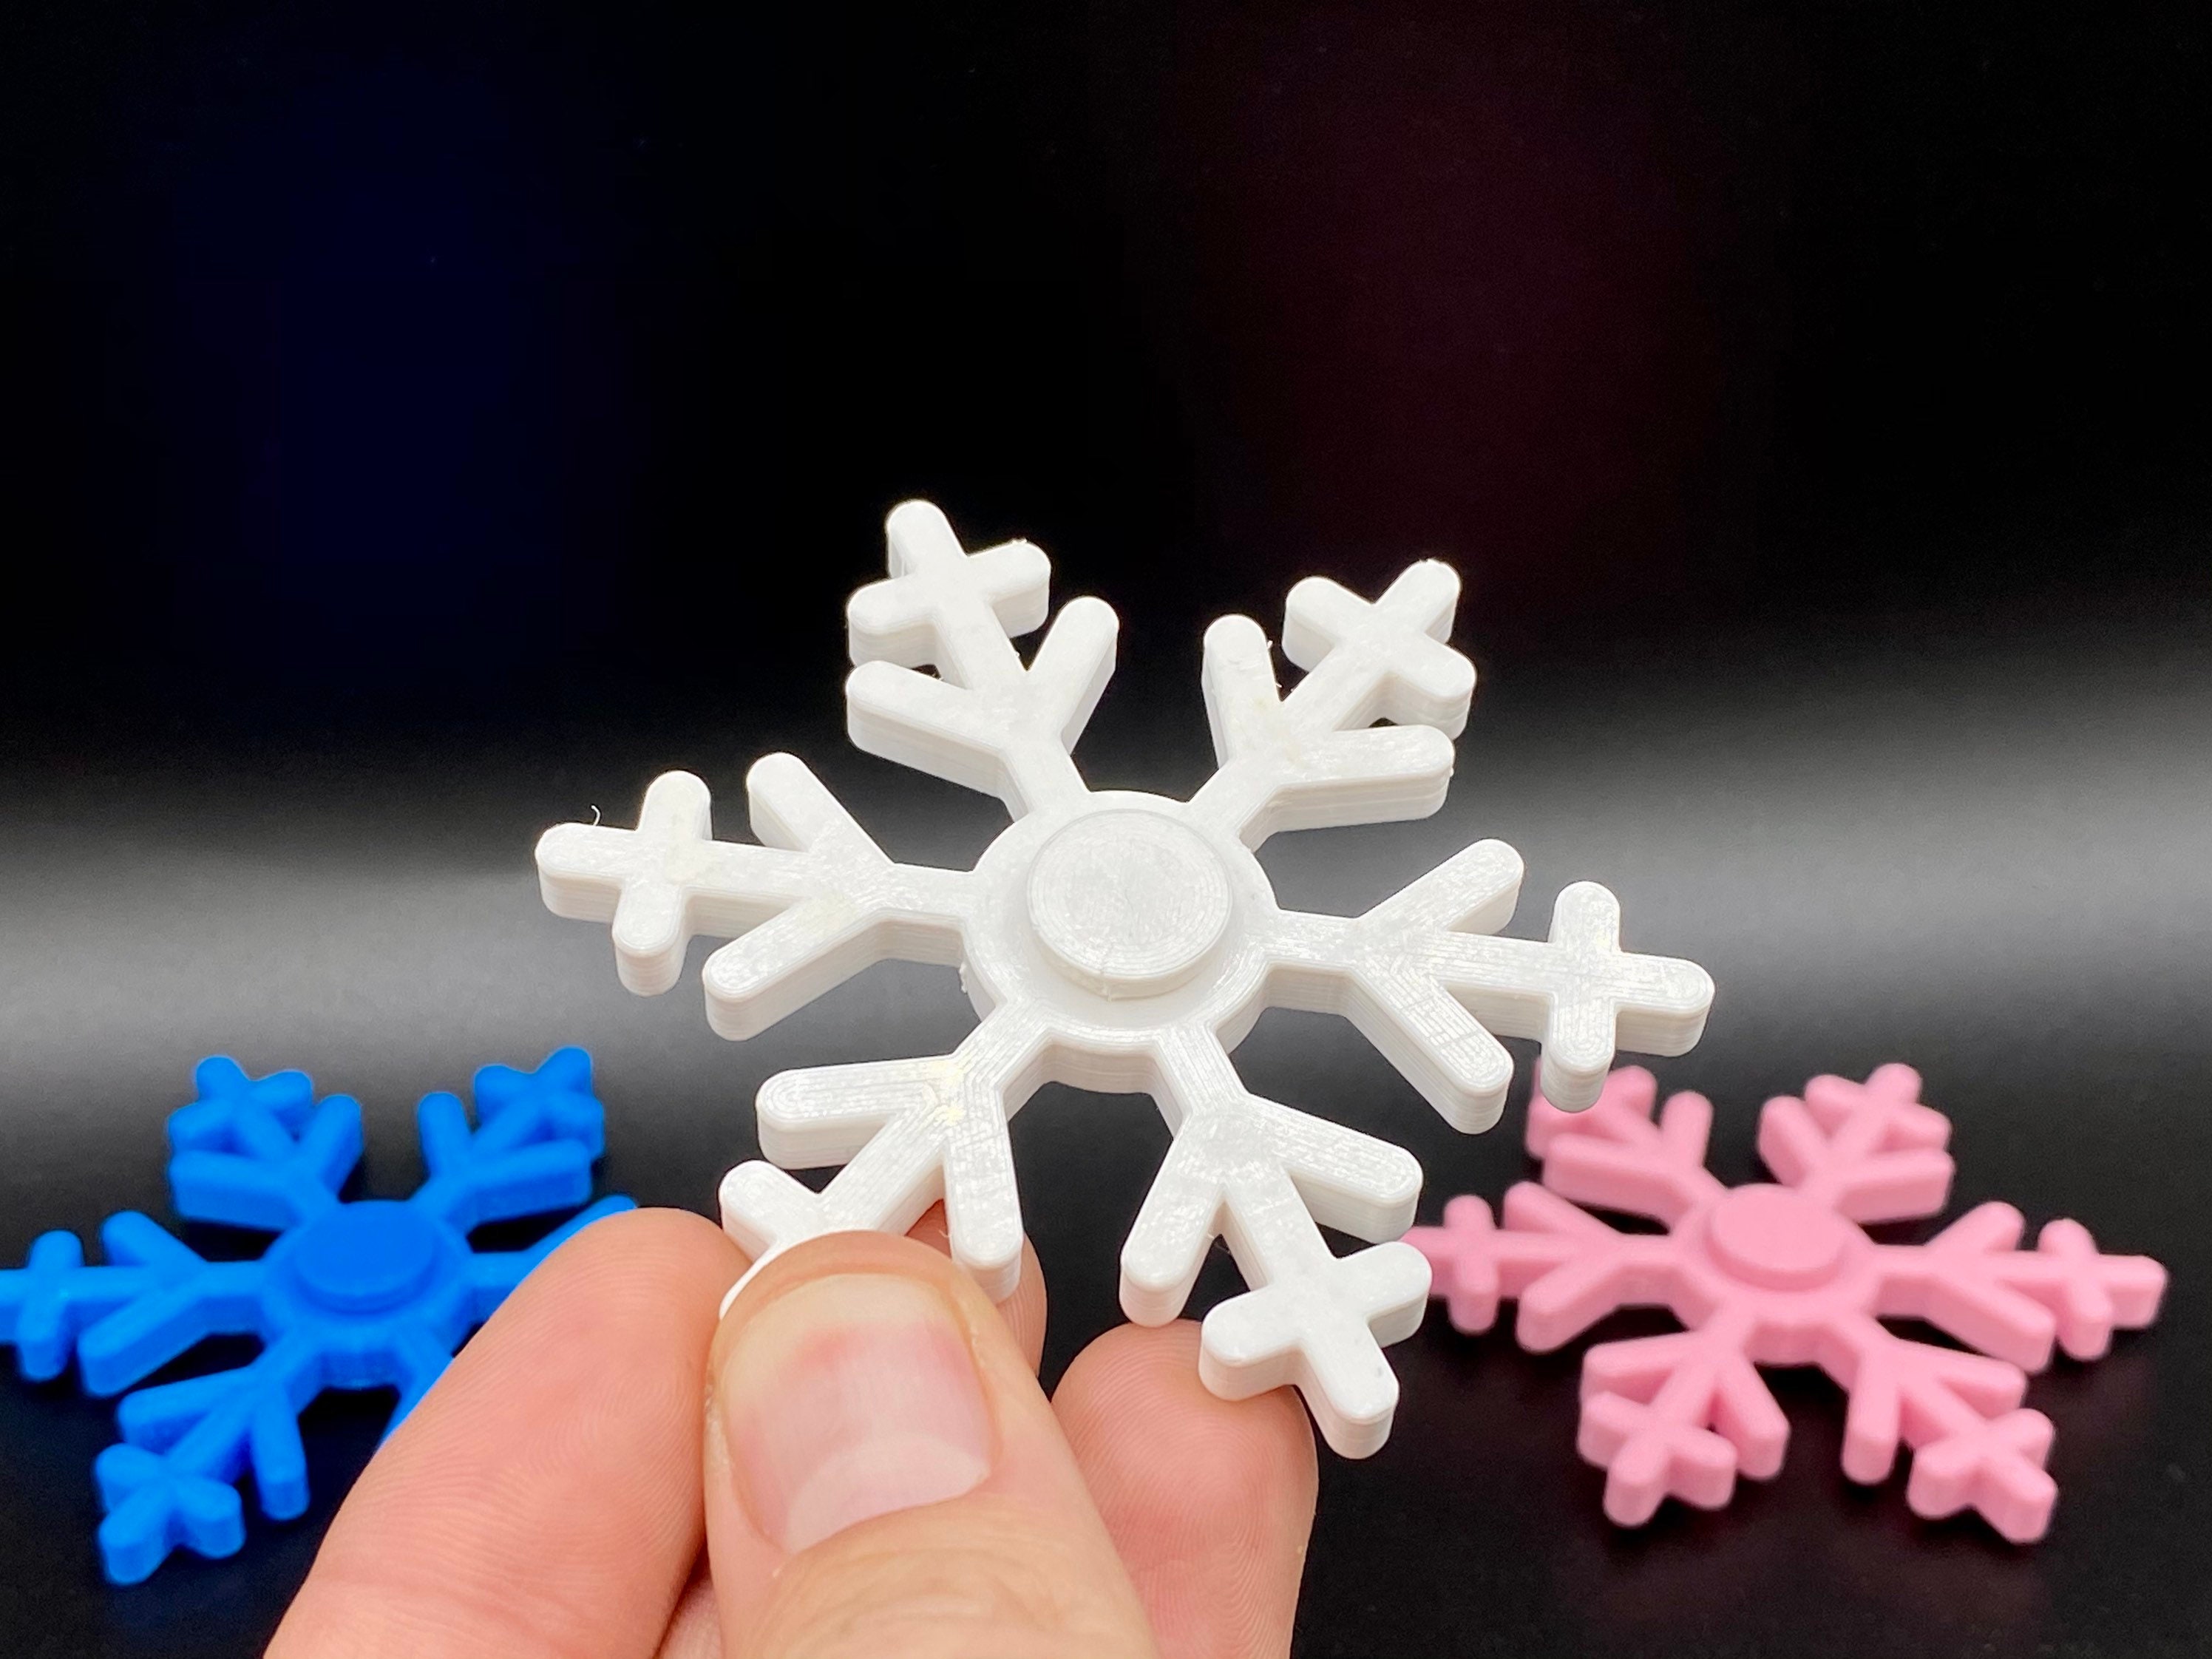 Snowflake Fidget Spinner (Classic) by Randomizy